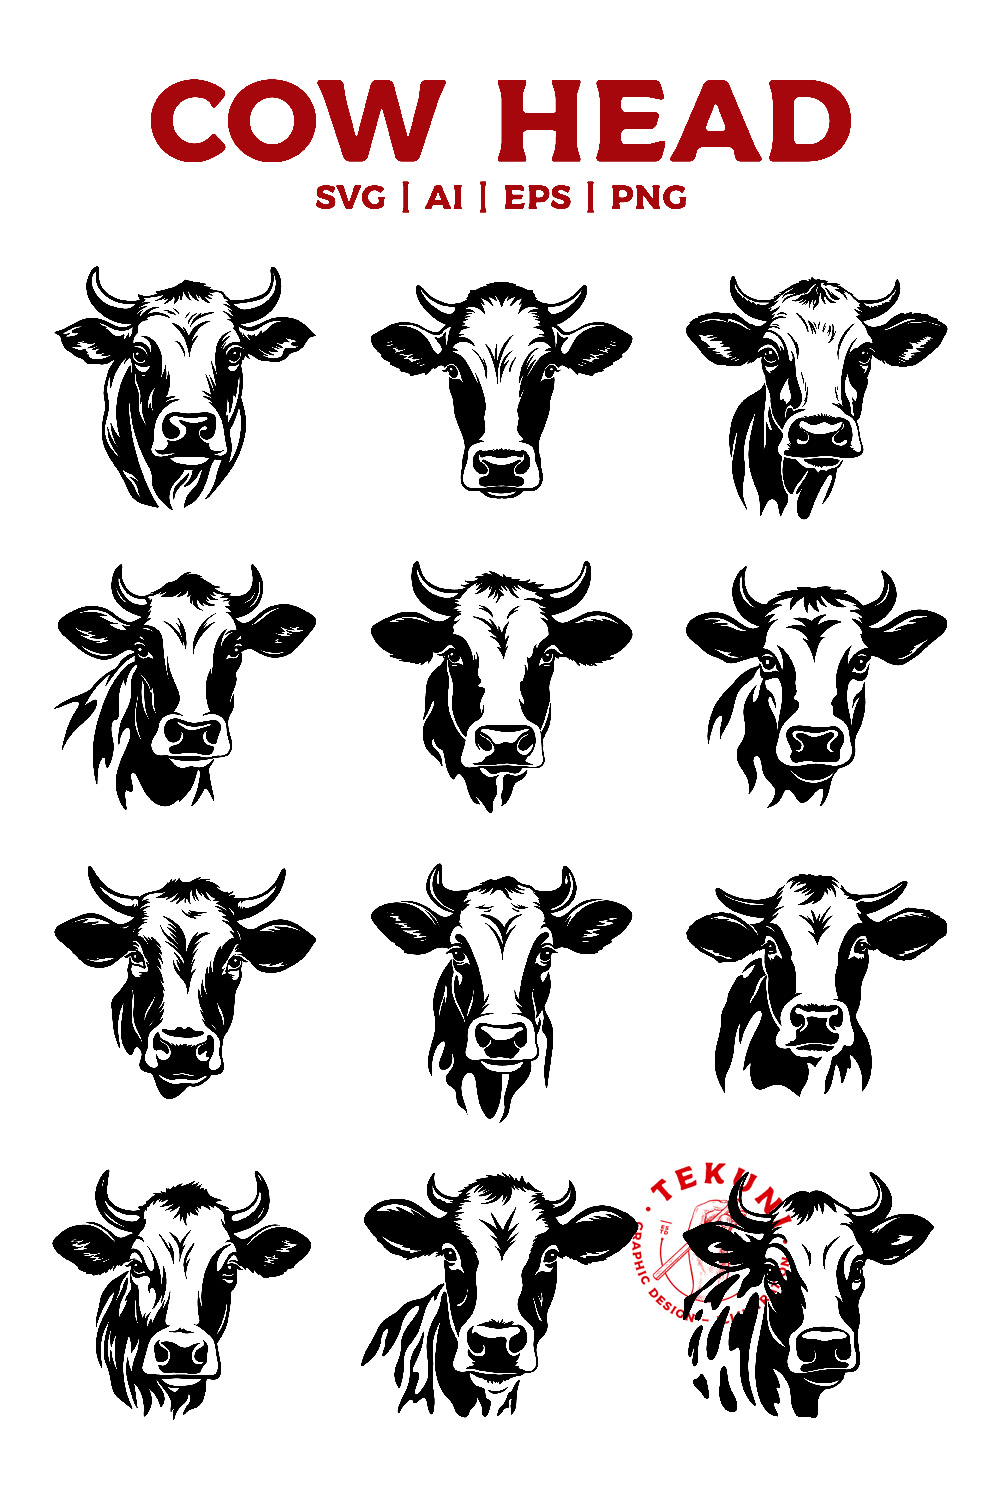 Cow head svg bundle, cow silhouette - Instant download pinterest preview image.